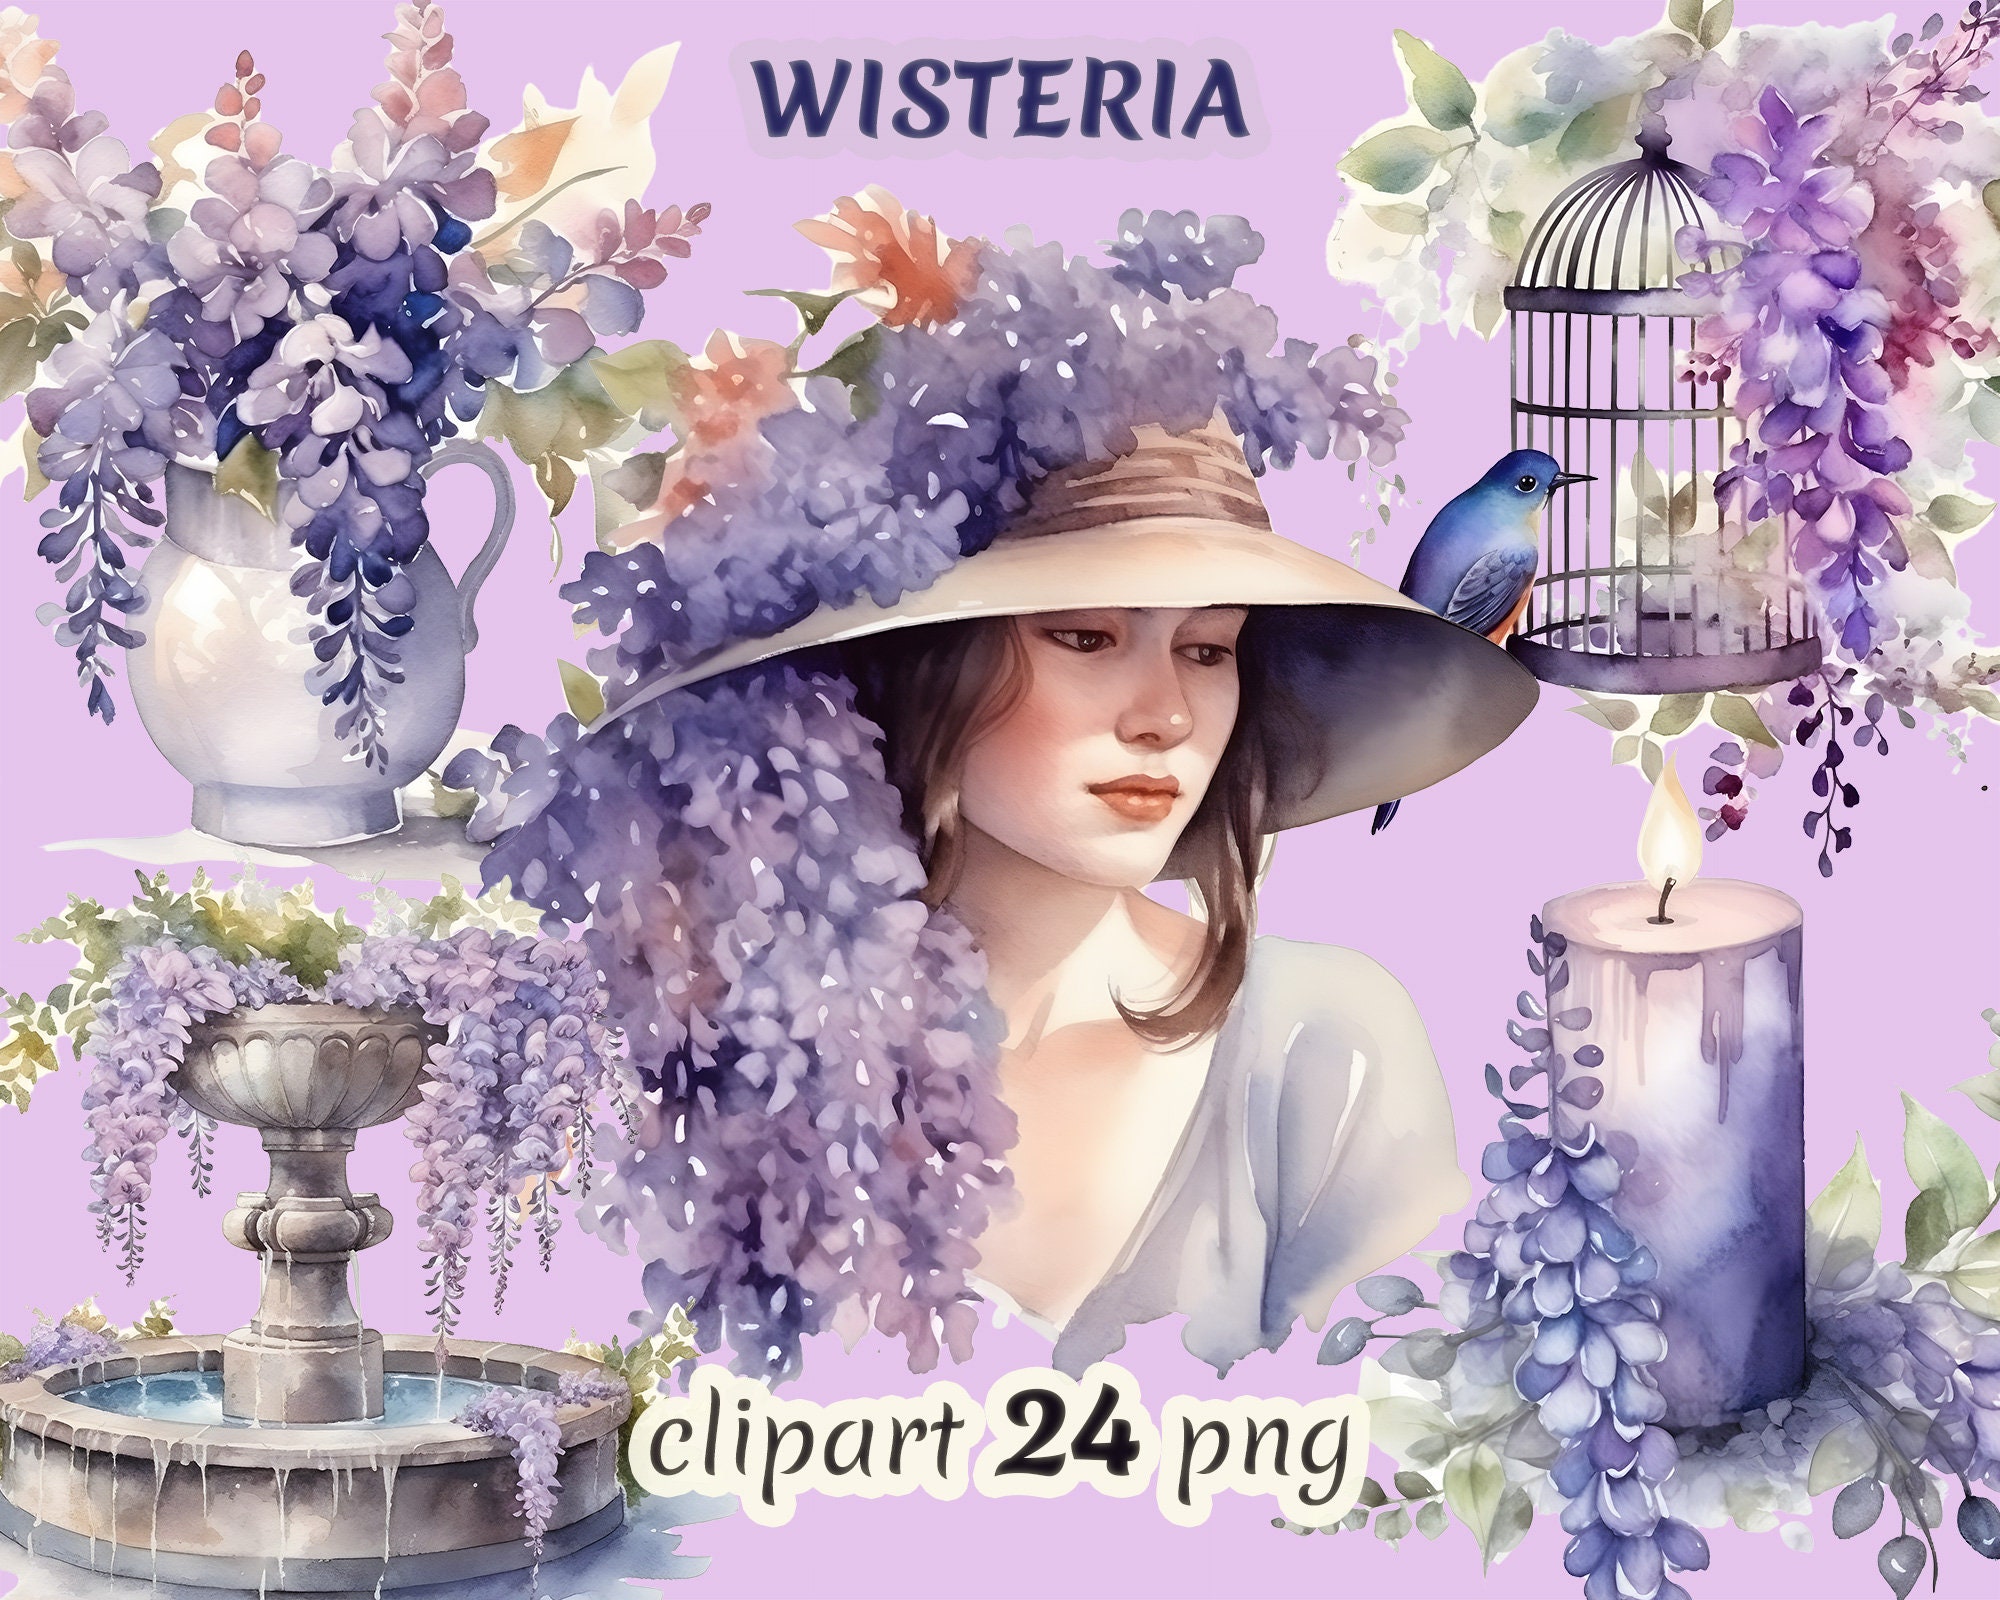 Wisteria 1oz 29.5ml Blue Glass Bottle of Premium Grade A Quality Fragrance Oil, Skin Safe Oil